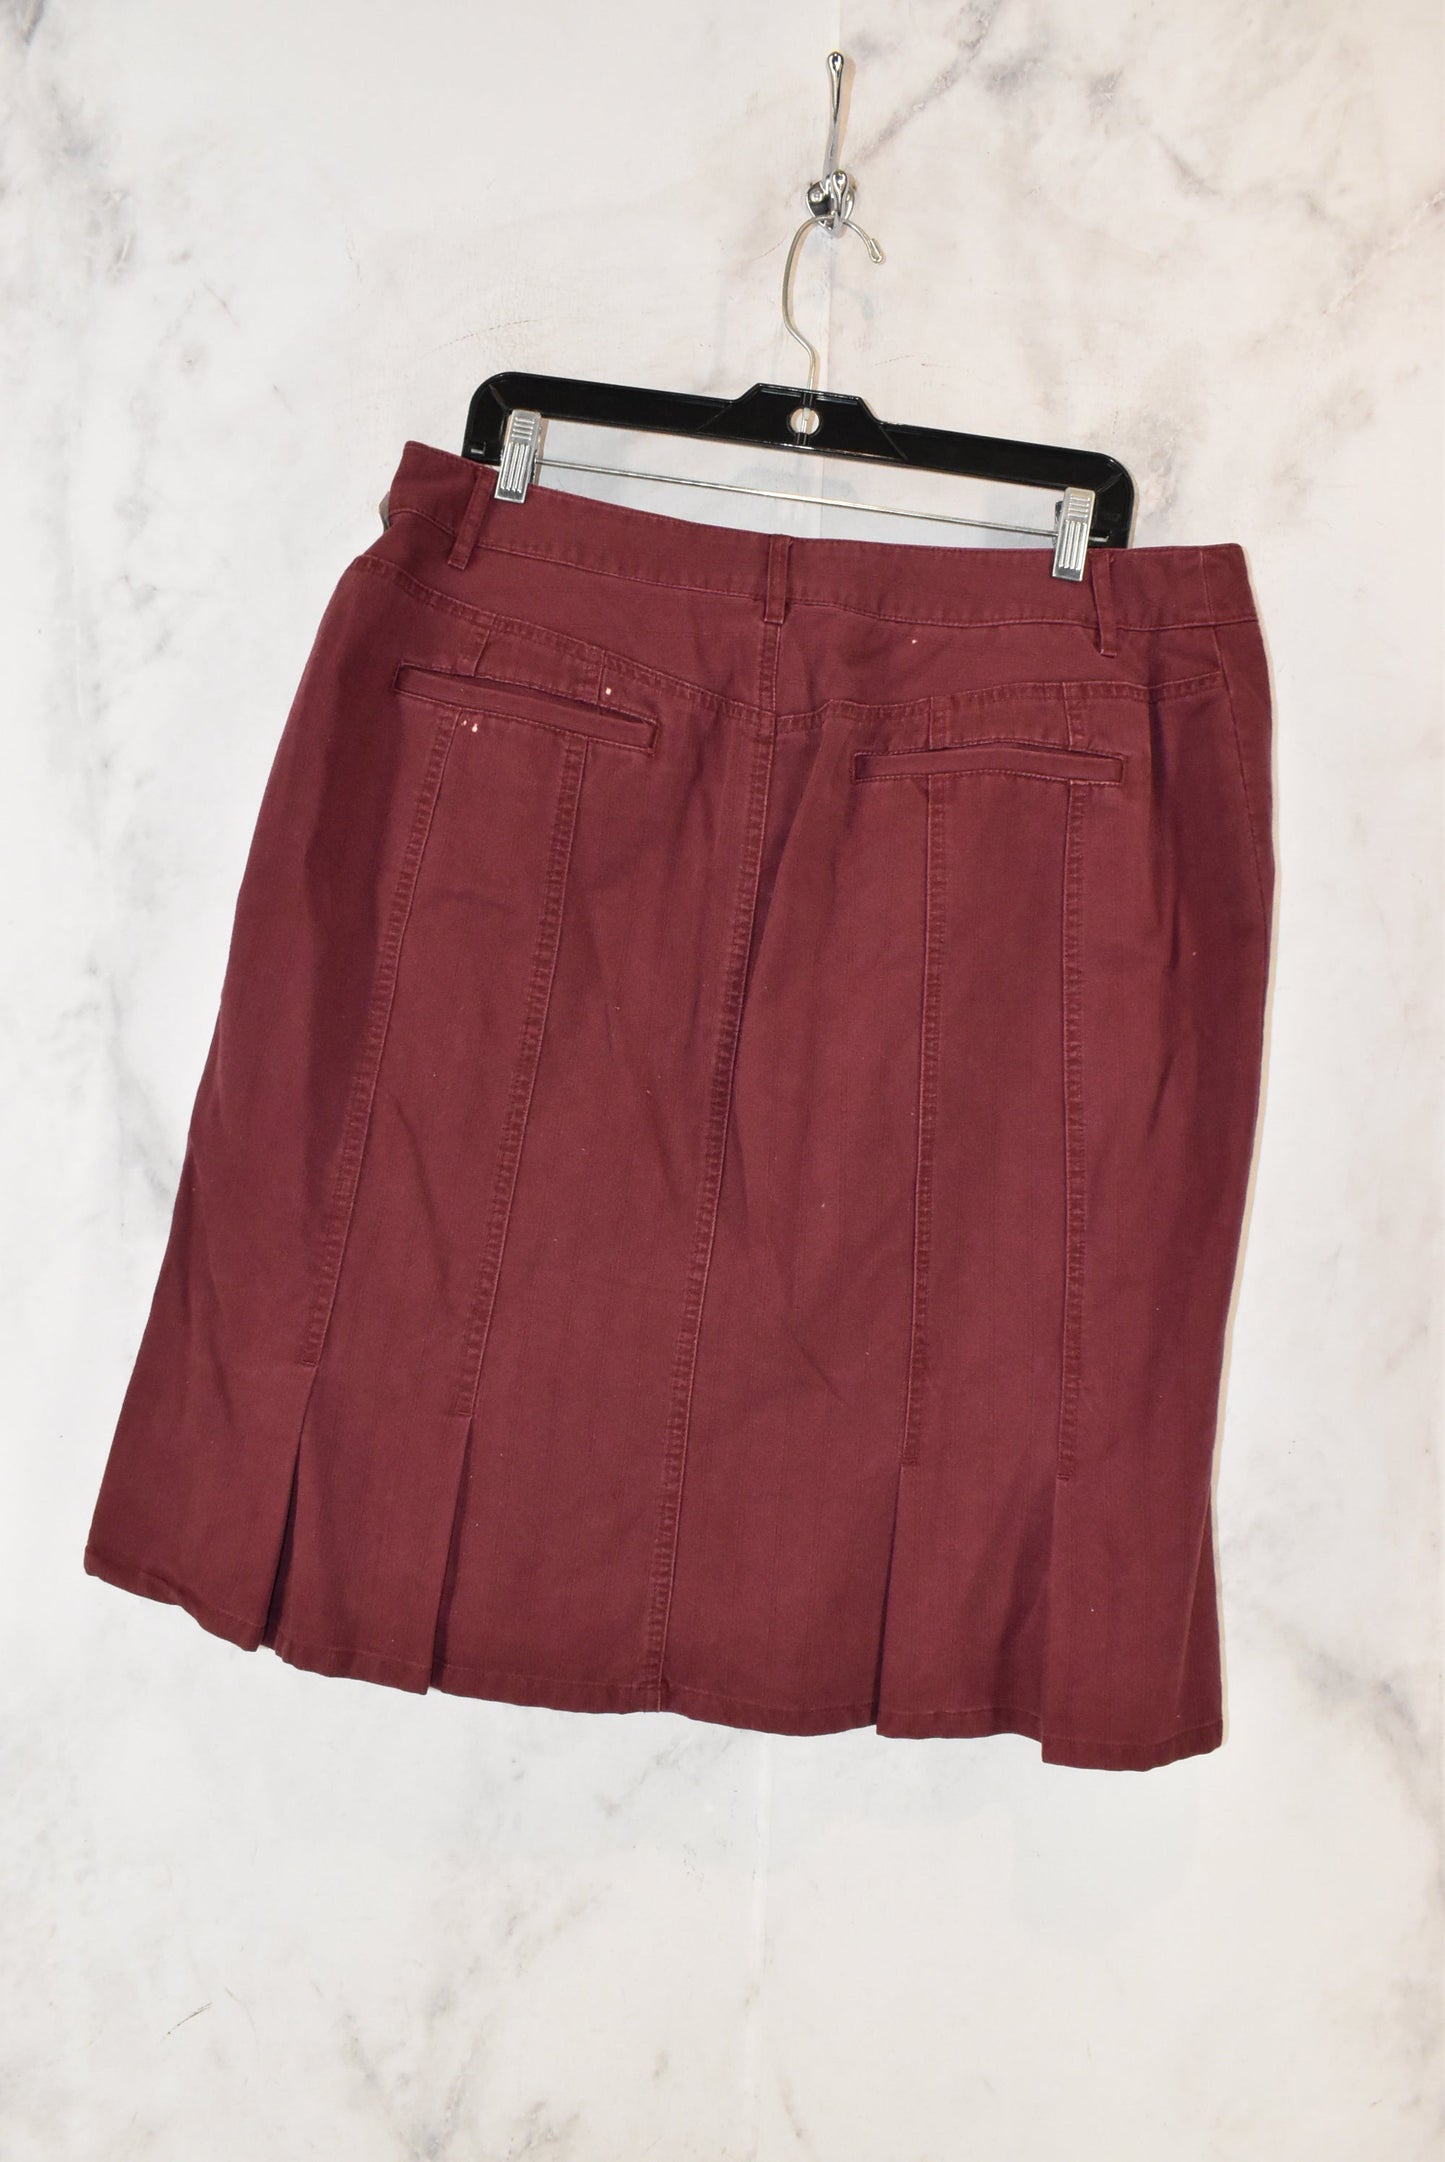 Skirt Midi By Venezia  Size: 20